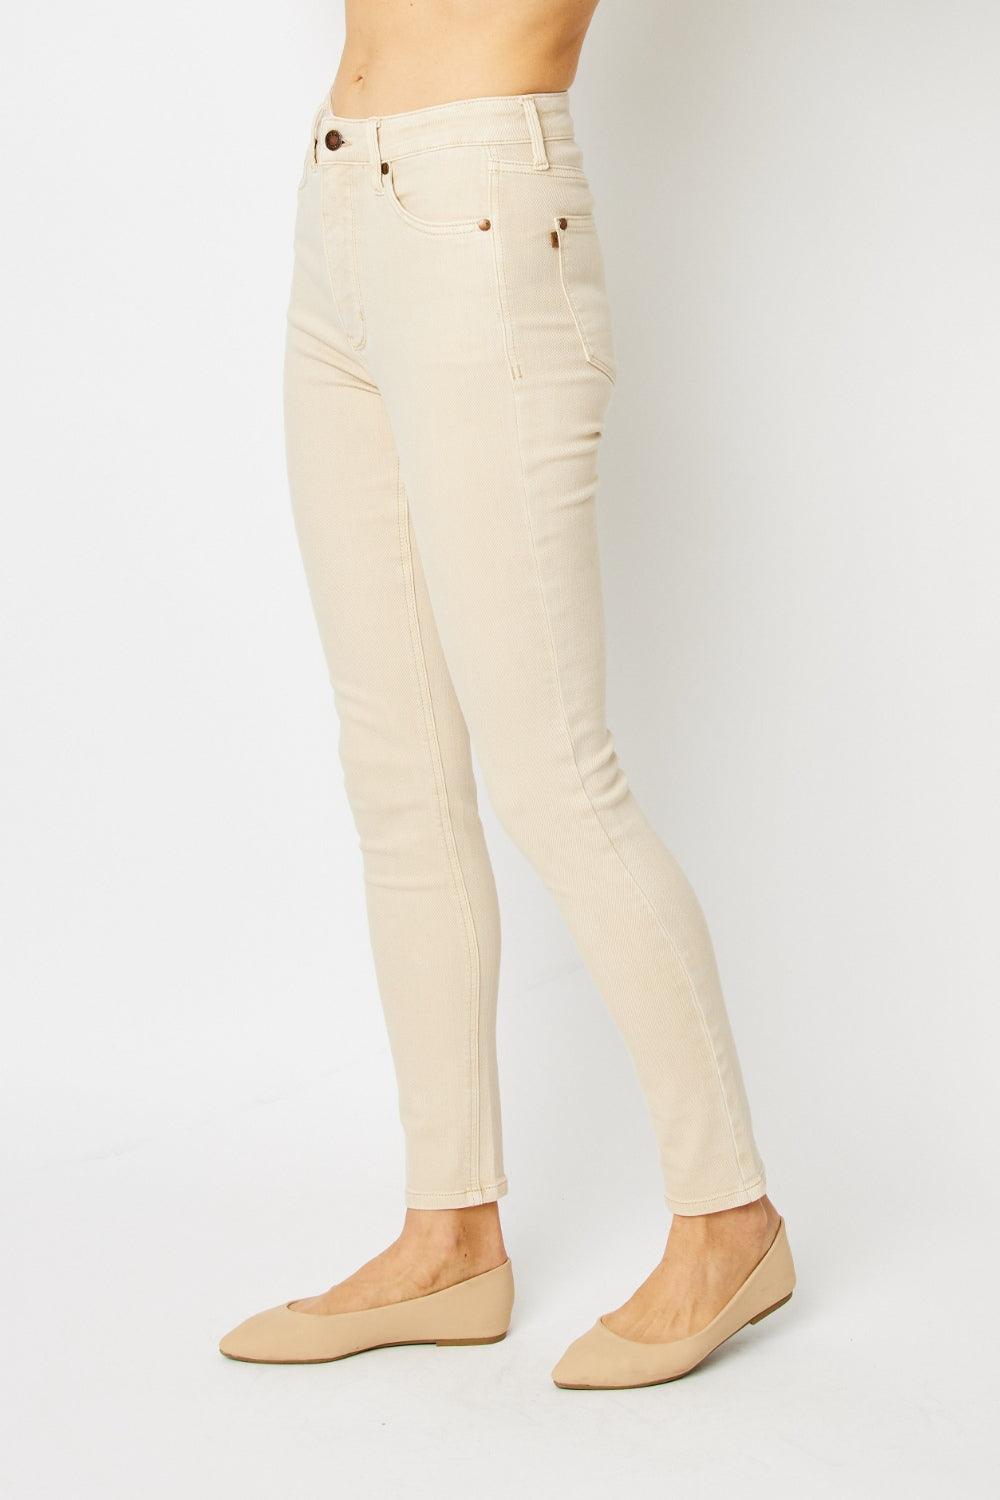 Judy Blue Garment Dyed Tummy Control Skinny Jeans - Jessiz Boutique